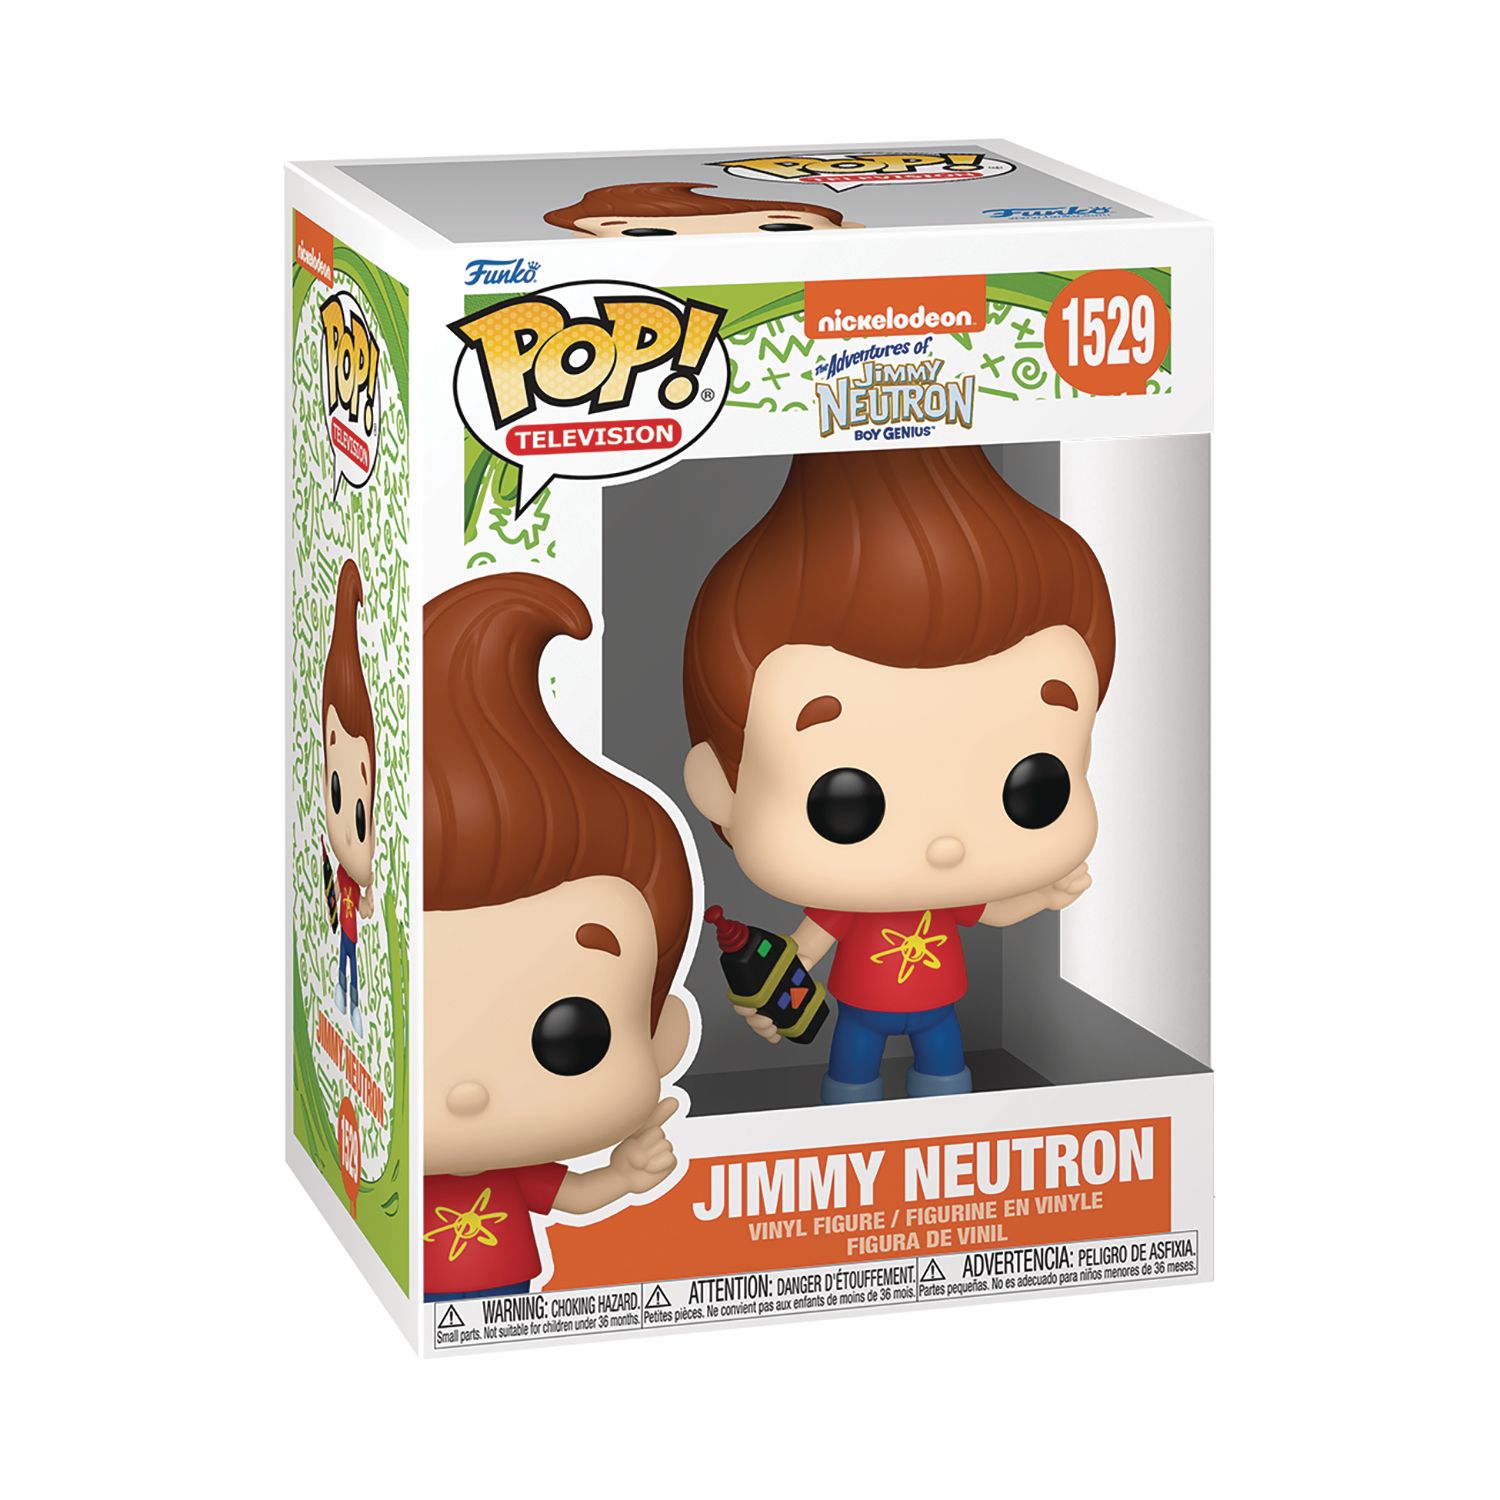 Nickelodeon The Adventures of Jimmy Neutron Boy Genius Jimmy Neutron Funko Pop! Vinyl Figure #1529